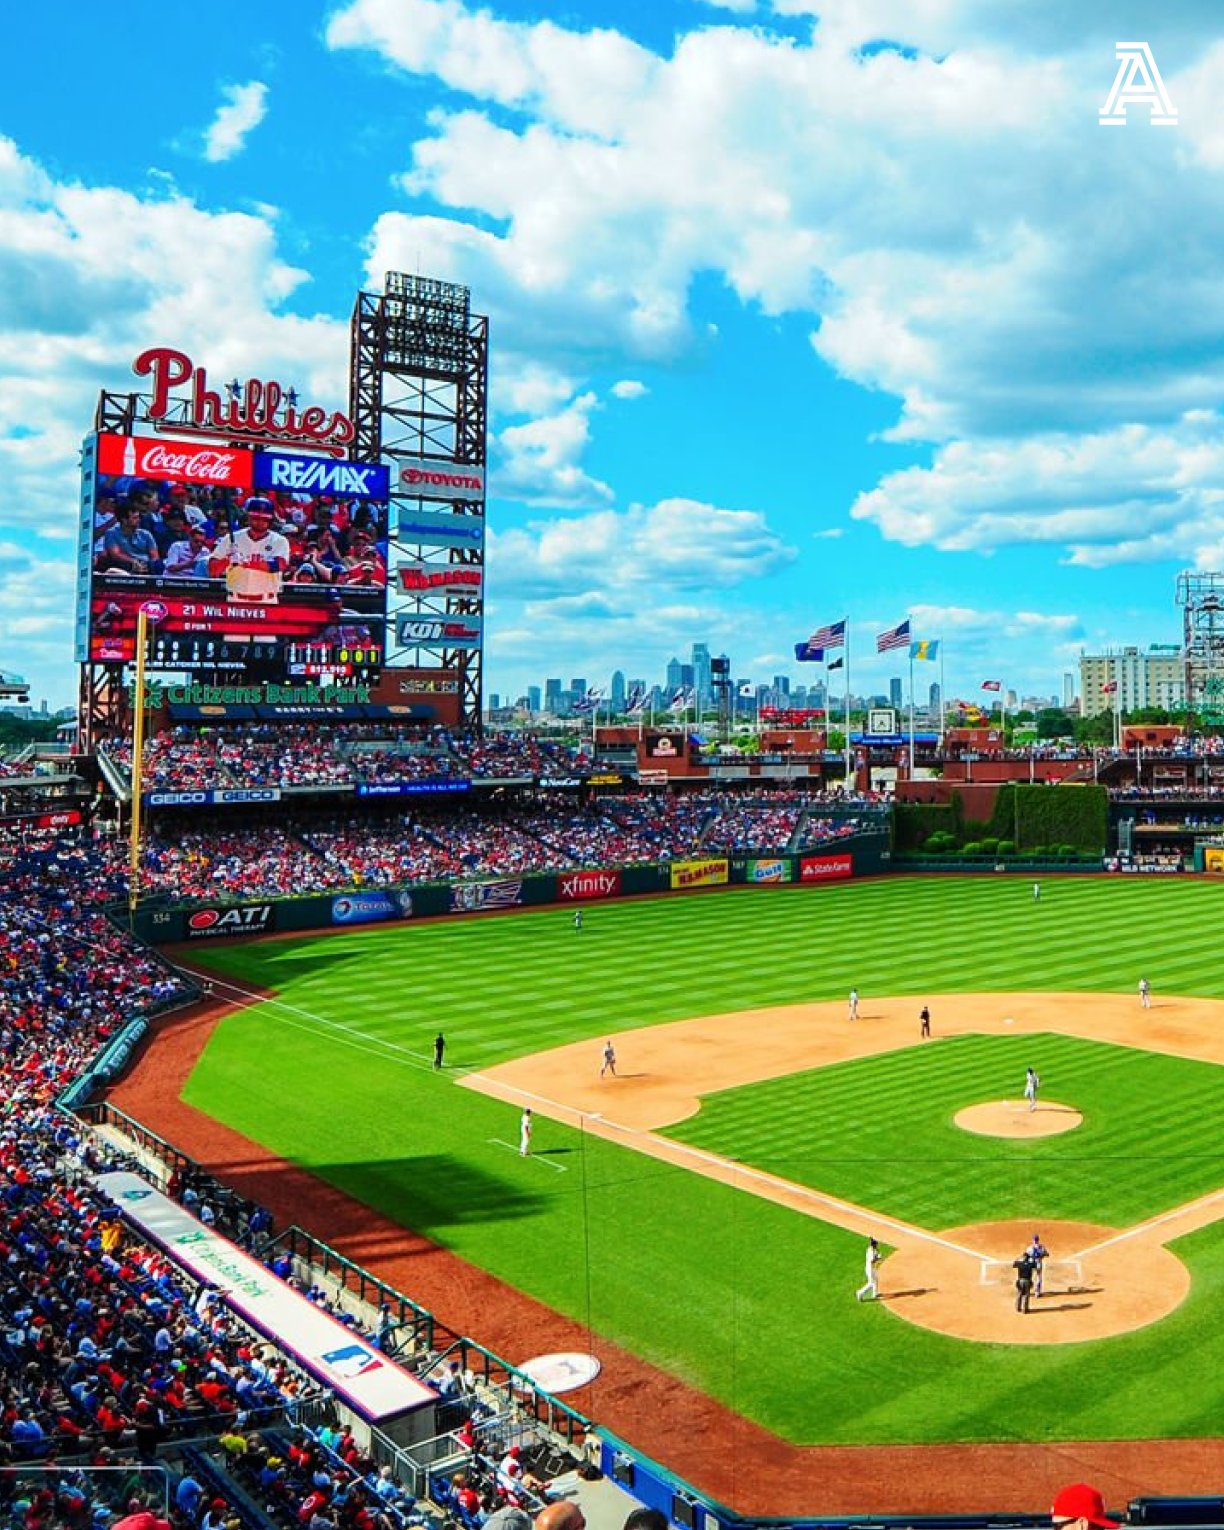 Phillies replacing Citizens Bank Park scoreboard in 2023